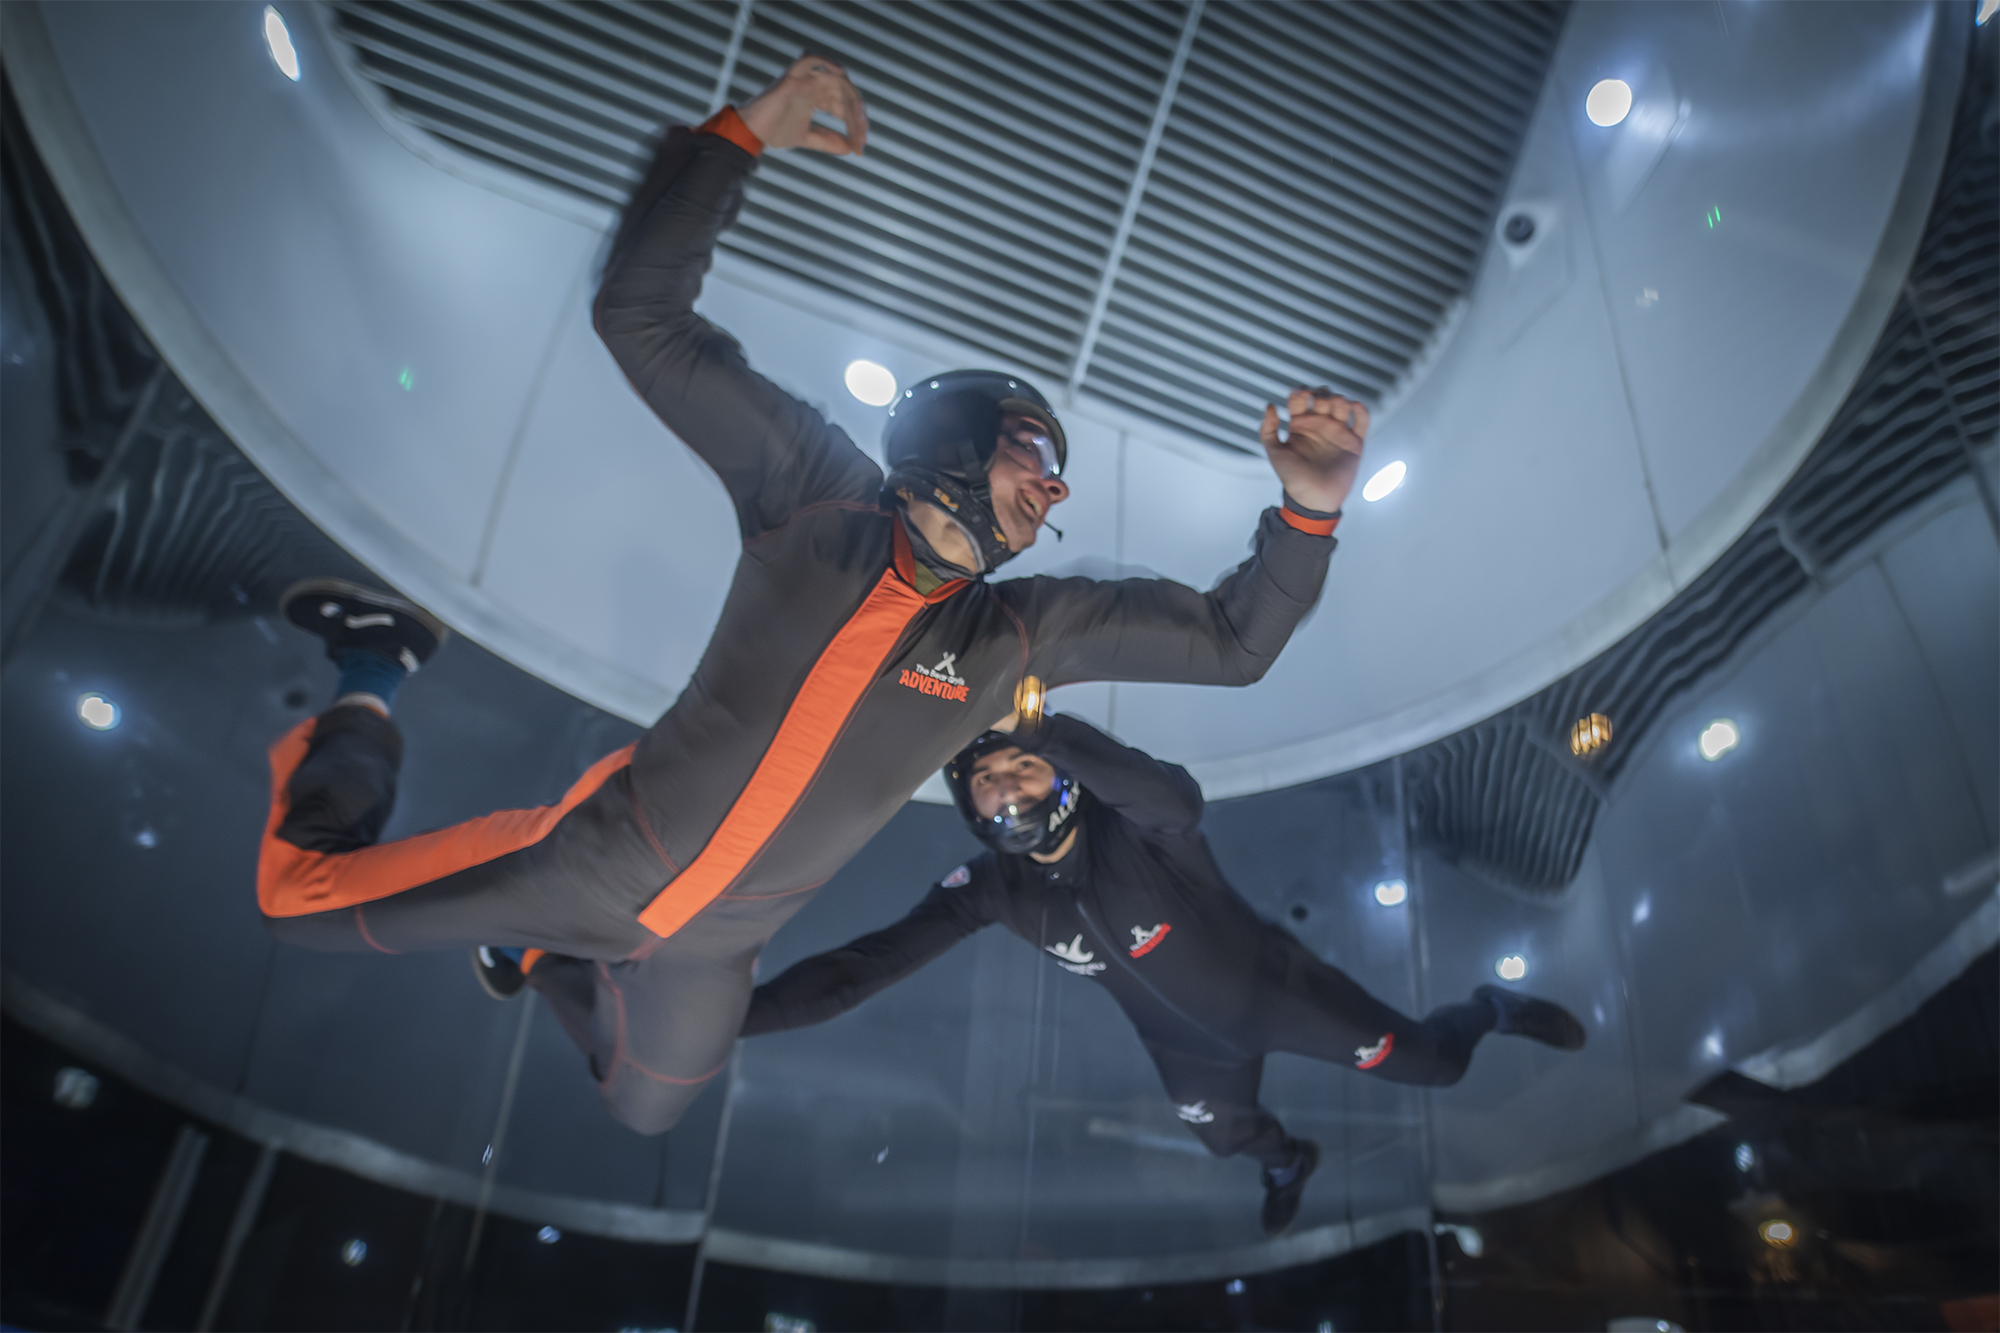 Man flies high in iFLY indoor skydiving tunnel at The Bear Grylls Adventure Birmingham